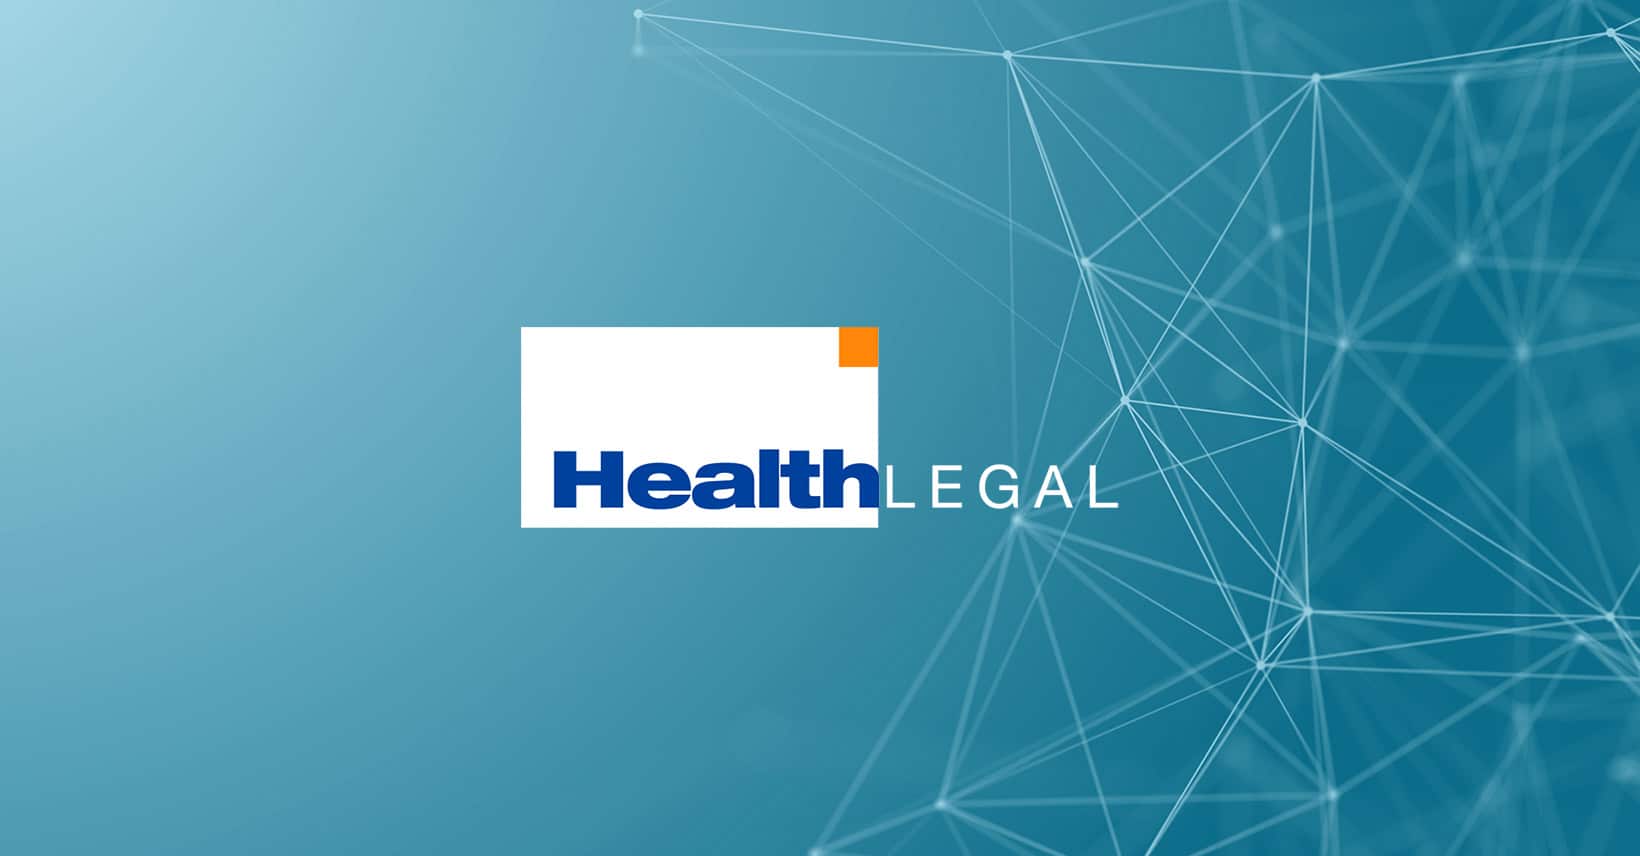 healthlegal featured image